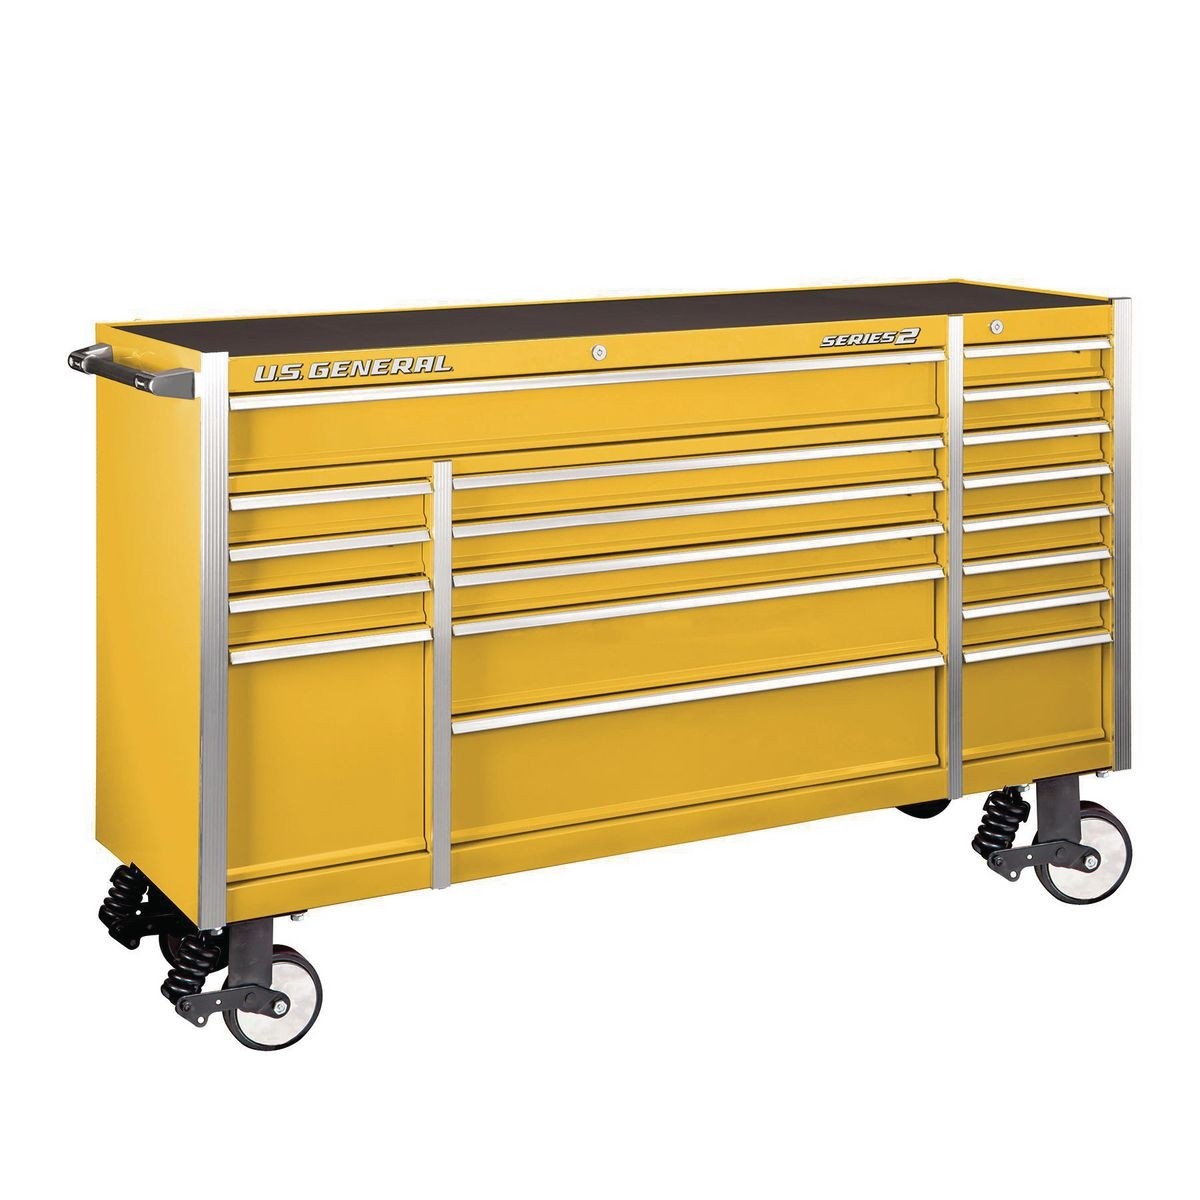 U.S. GENERAL 72 In. X 22 In. Triple Bank Roller Cabinet – Yellow – Item 56118